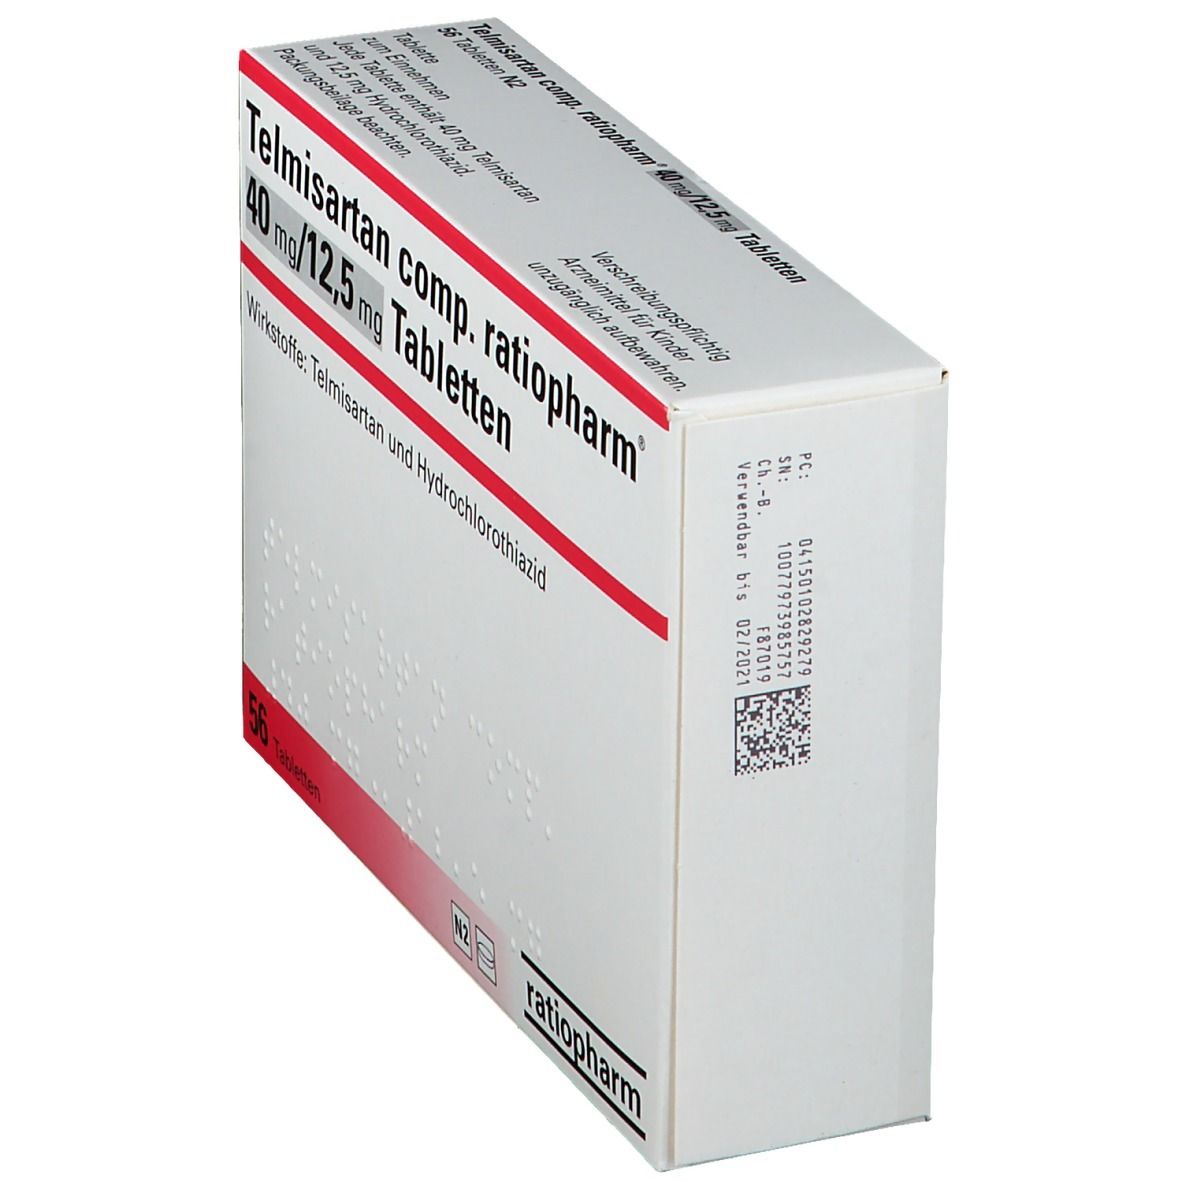 Telmisartan comp. ratiopharm® 40 mg/12,5 mg